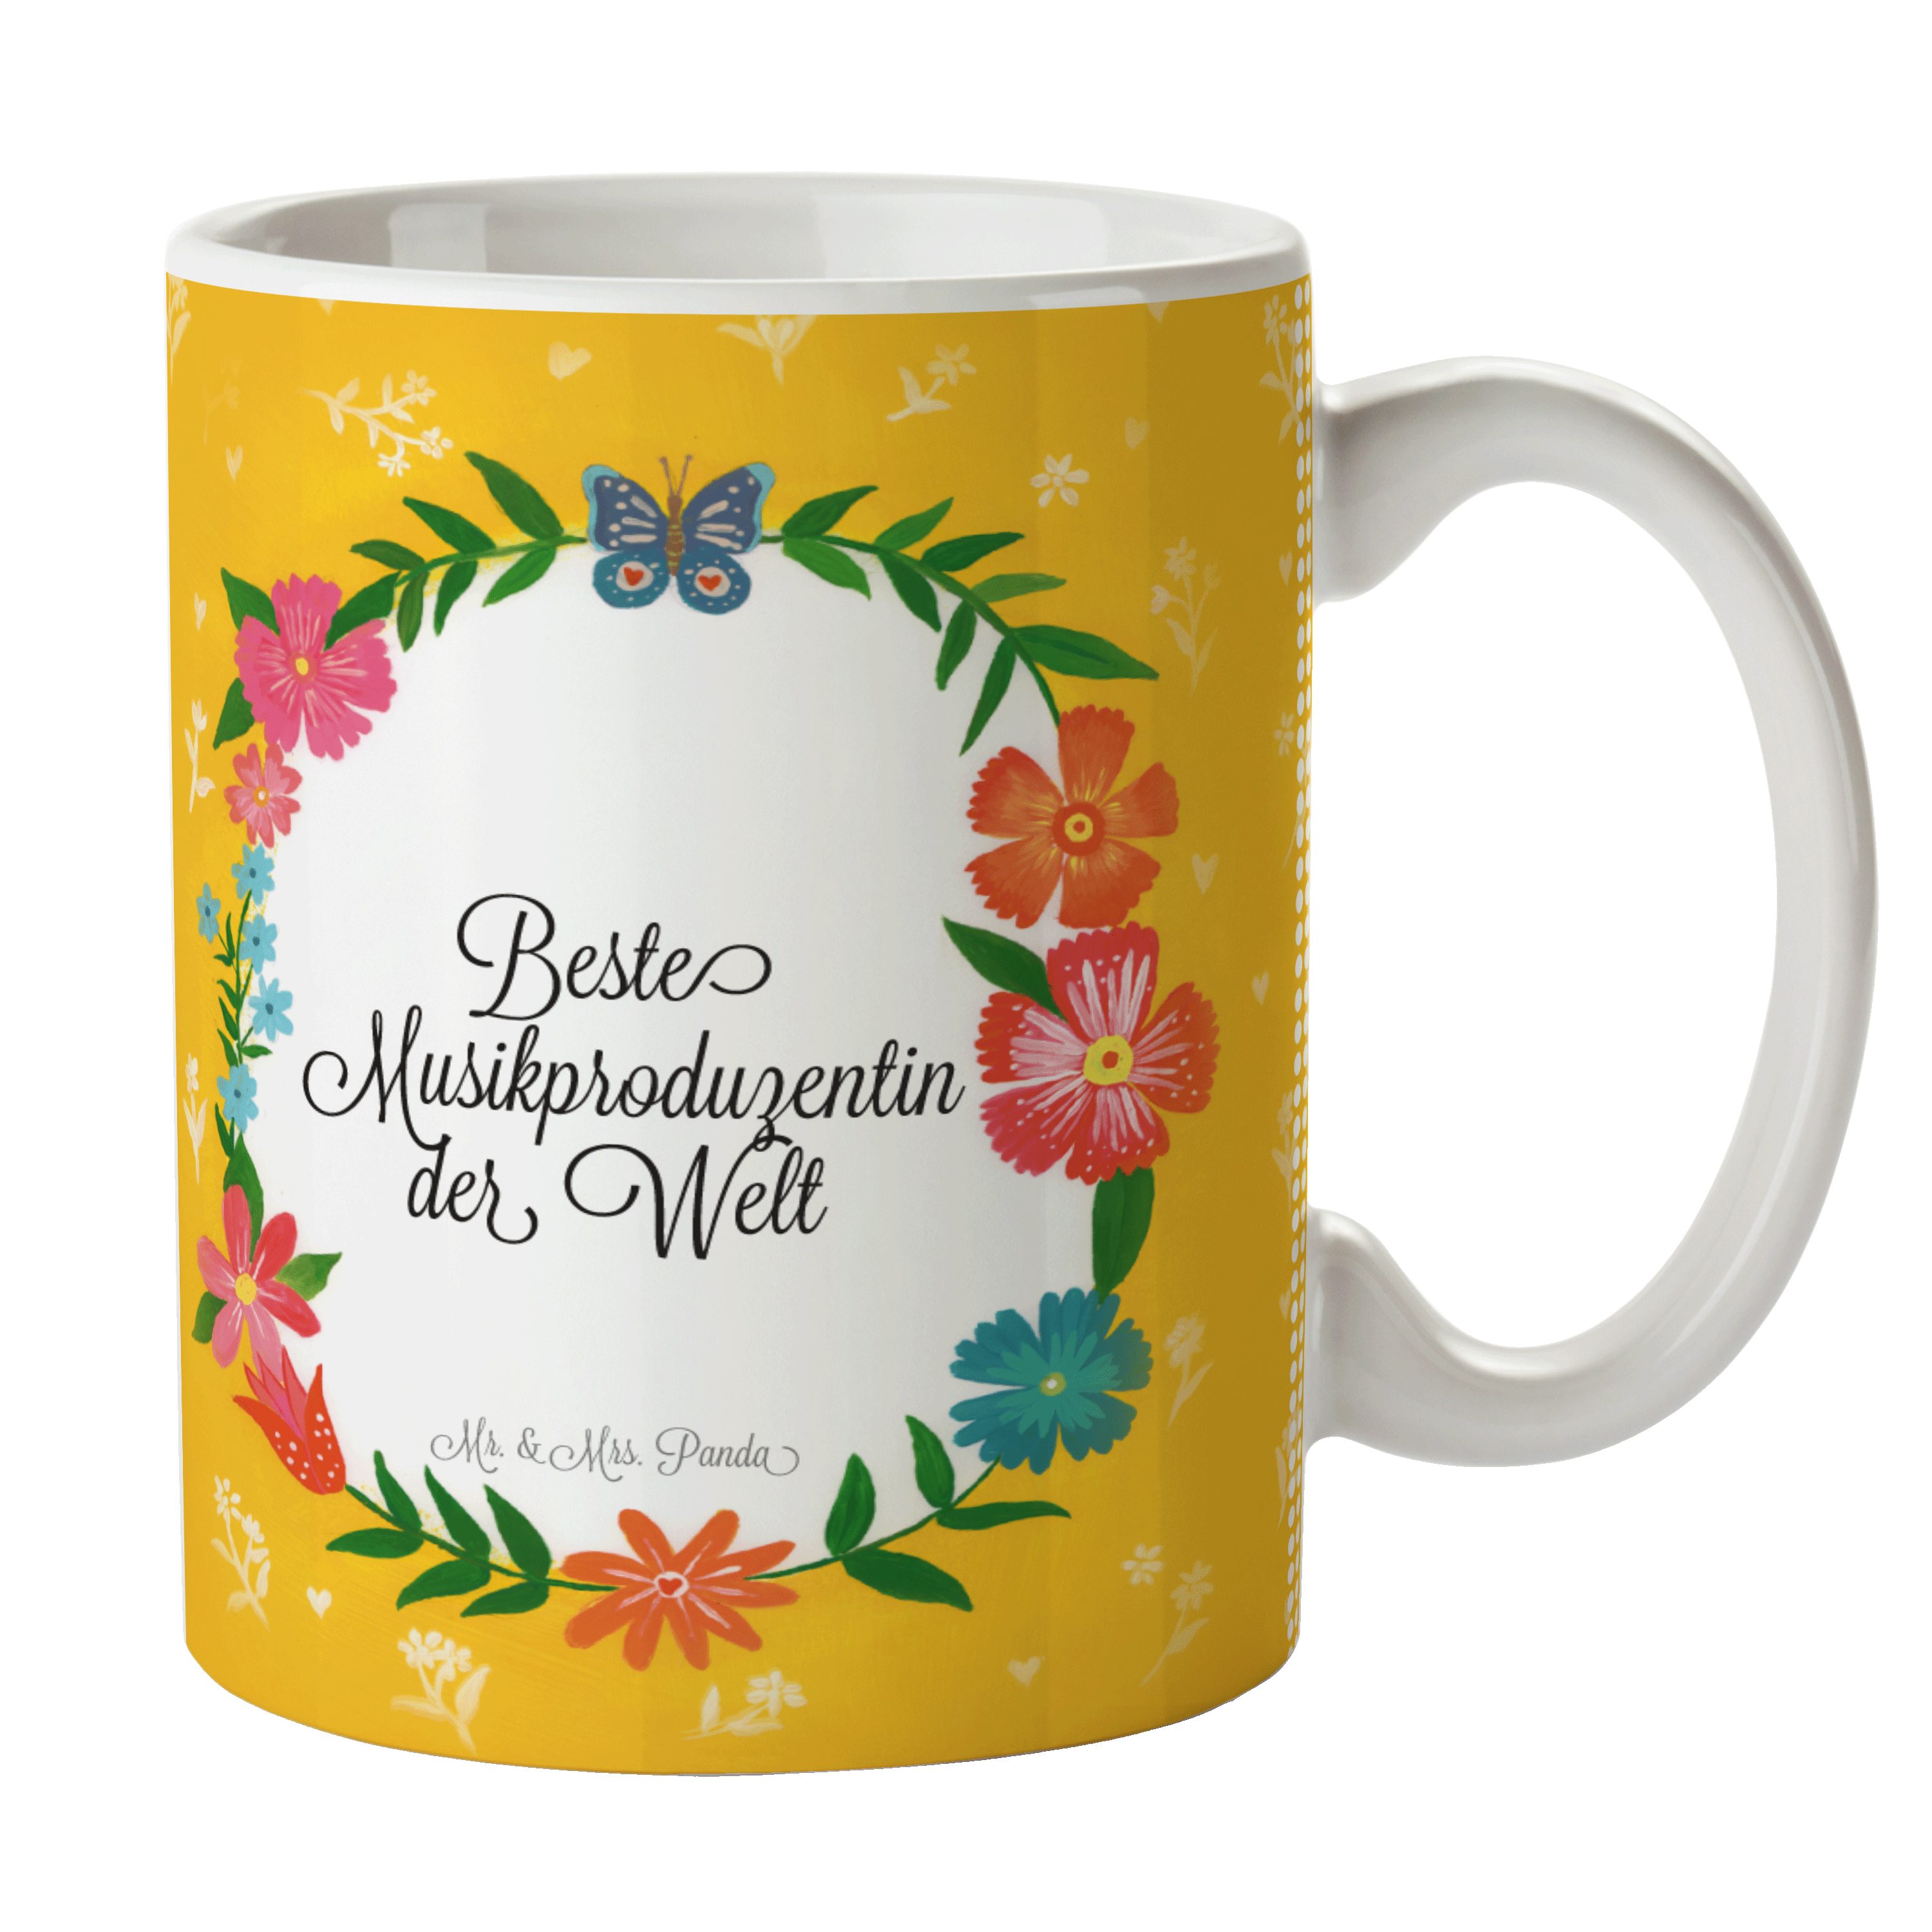 Mr. & Mrs. Panda Keramik Tasse, Geschenk, Tasse Geschenk Musikproduzentin Kaffeetasse, - Beruf, Bech